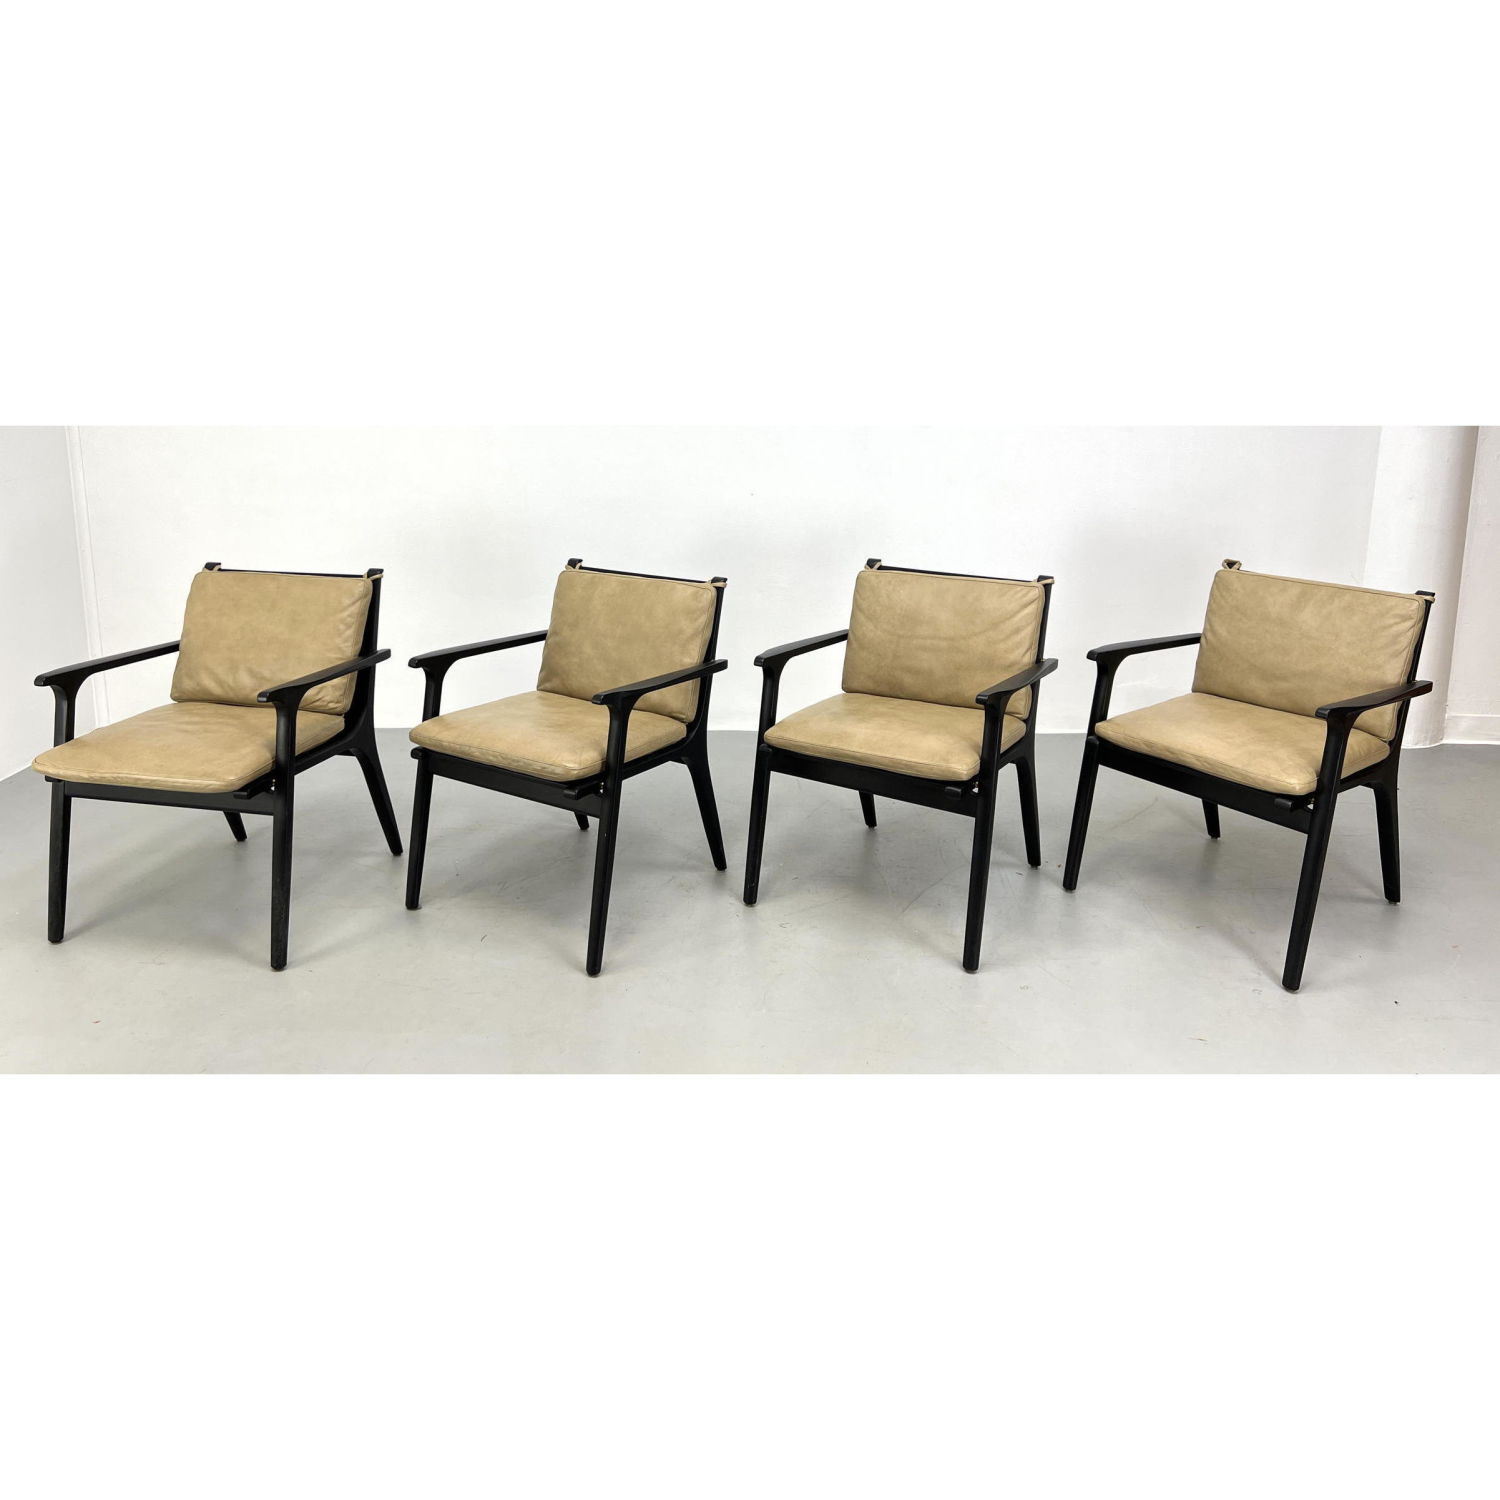 Set 4 Ren dining chair designed